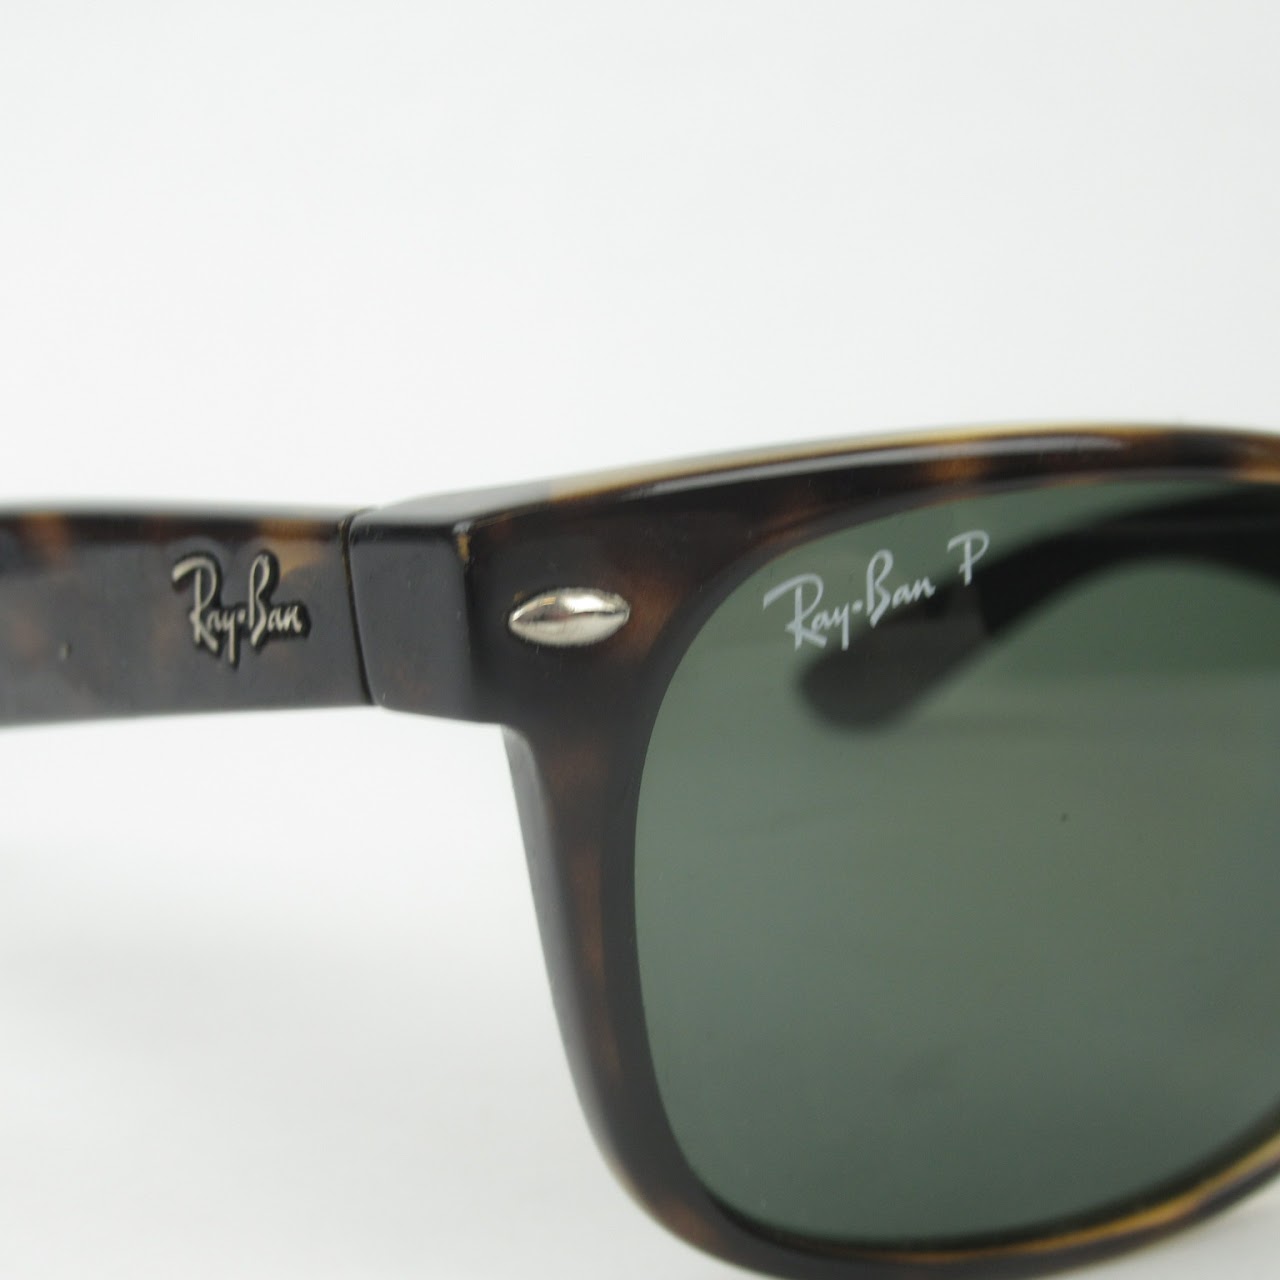 Ray-Ban Polarized New Wayfarer Sunglasses